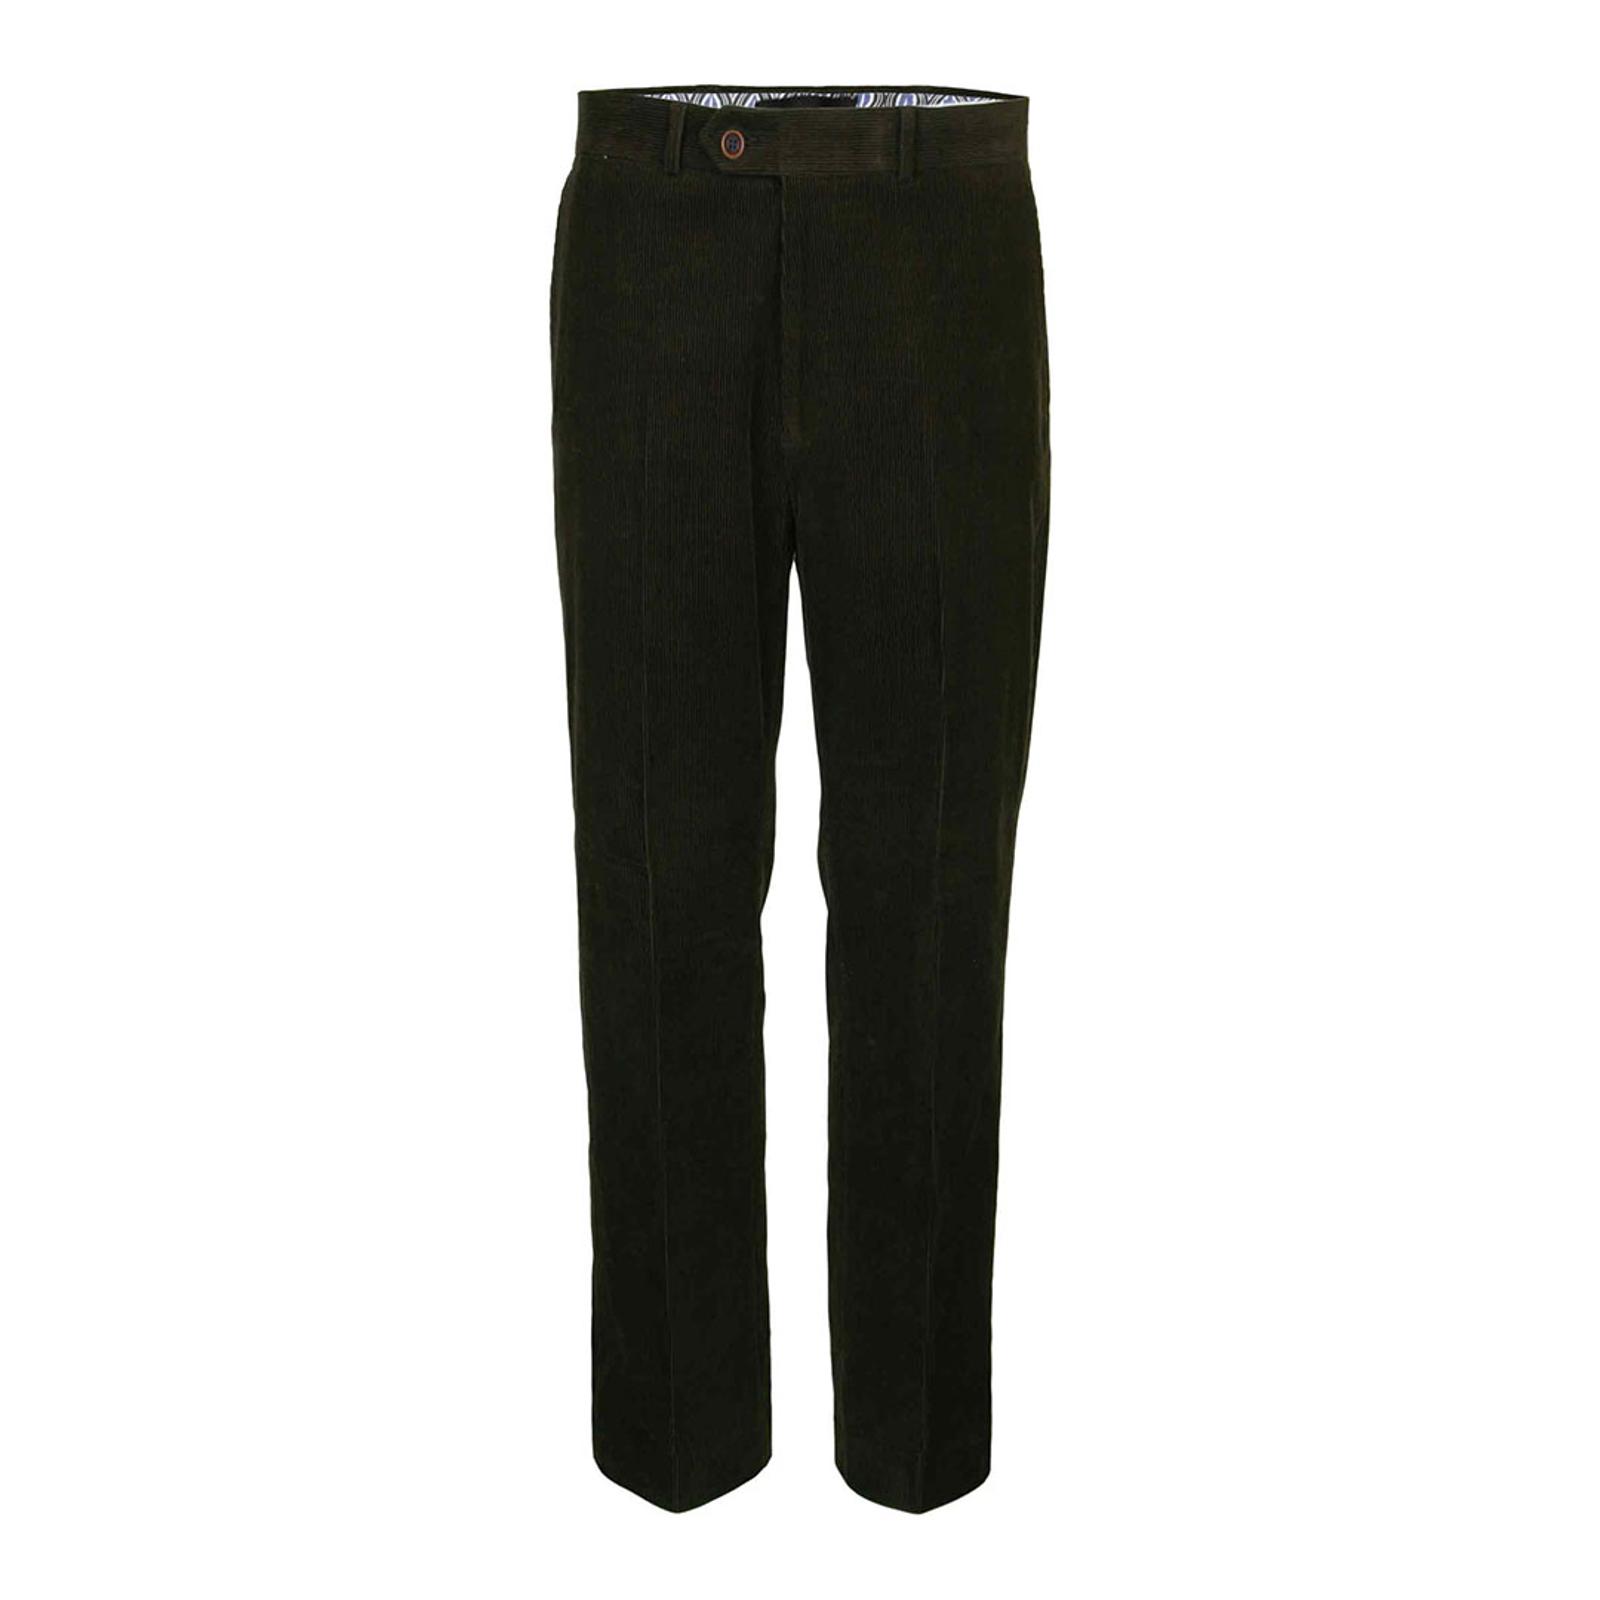 Dark Green Corduroy Cotton Blend Trousers - BrandAlley